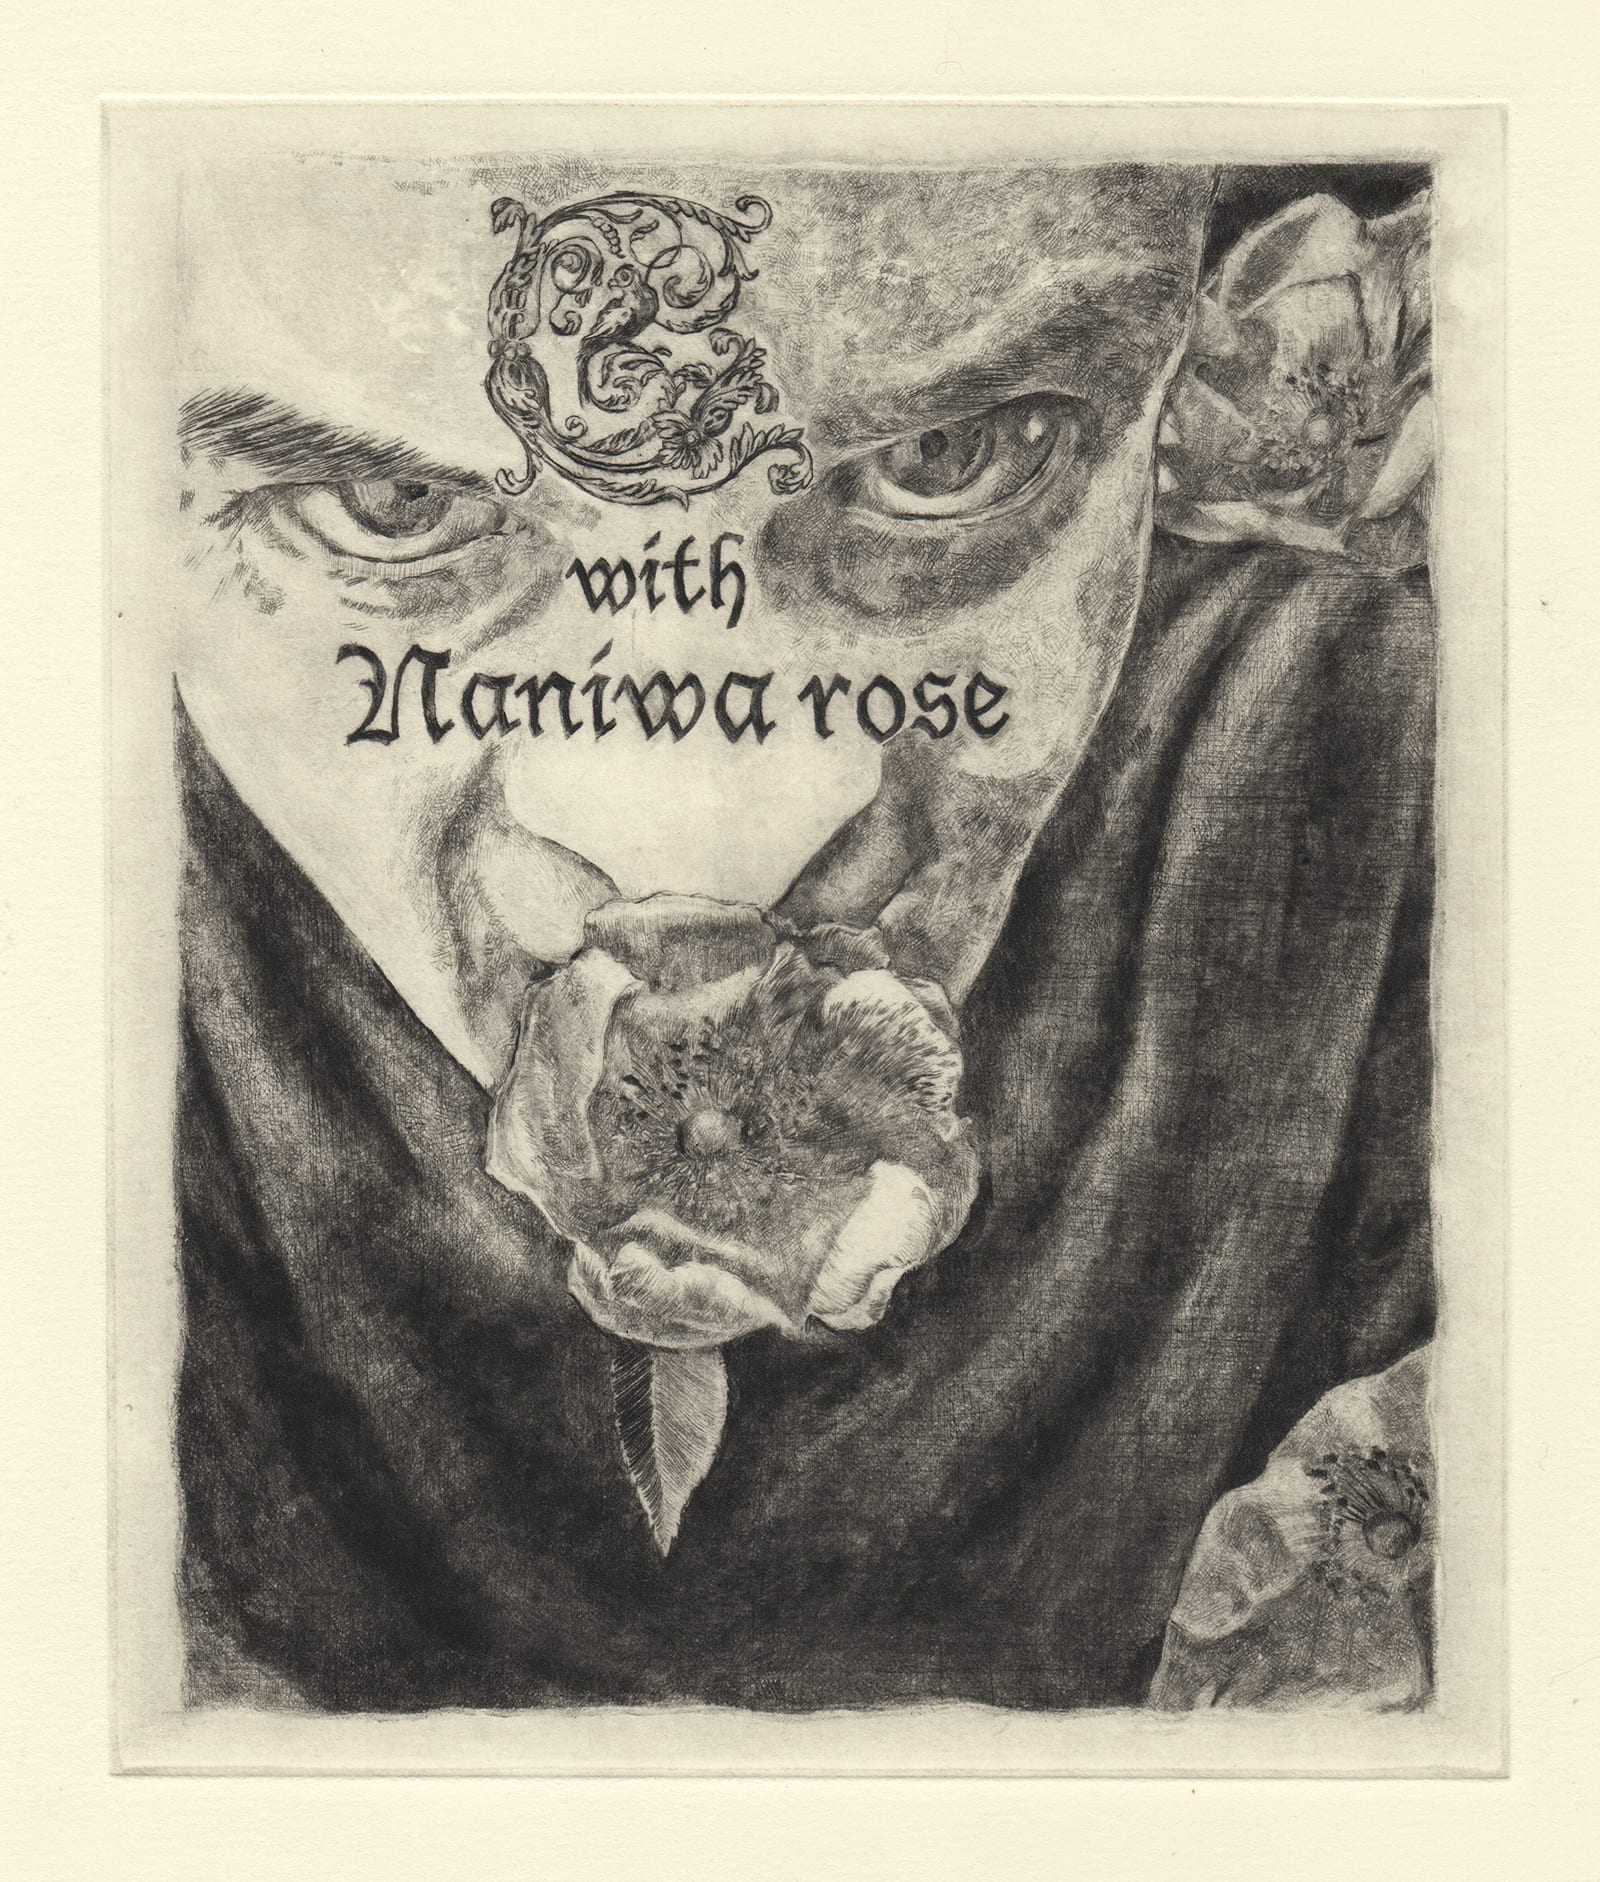 C with Naniwa rose 2 (drypoint etching by Yaemi Shigyo)